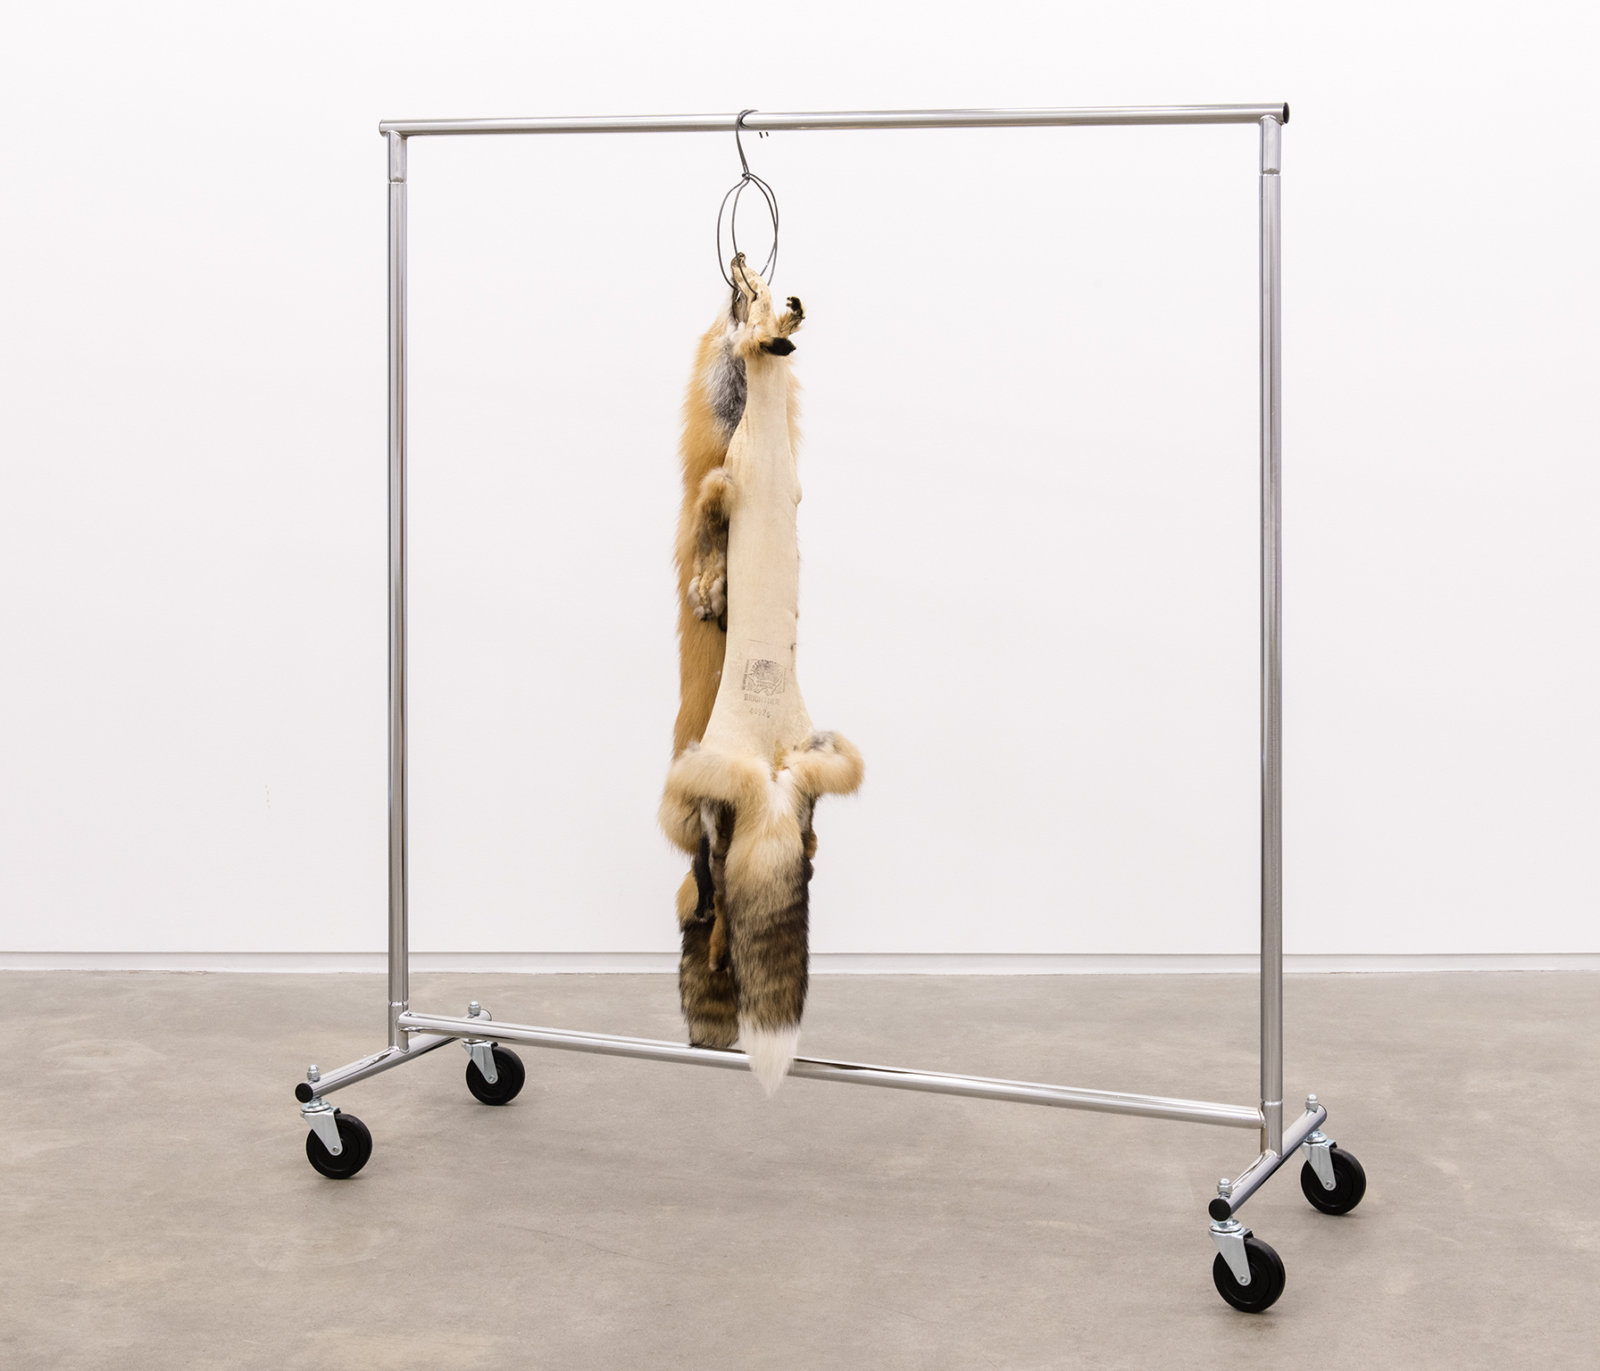 Duane Linklater, Kiss, 2014, fox furs, garment rack, hangers, 66 x 60 x 20 in. (168 x 151 x 52 cm)